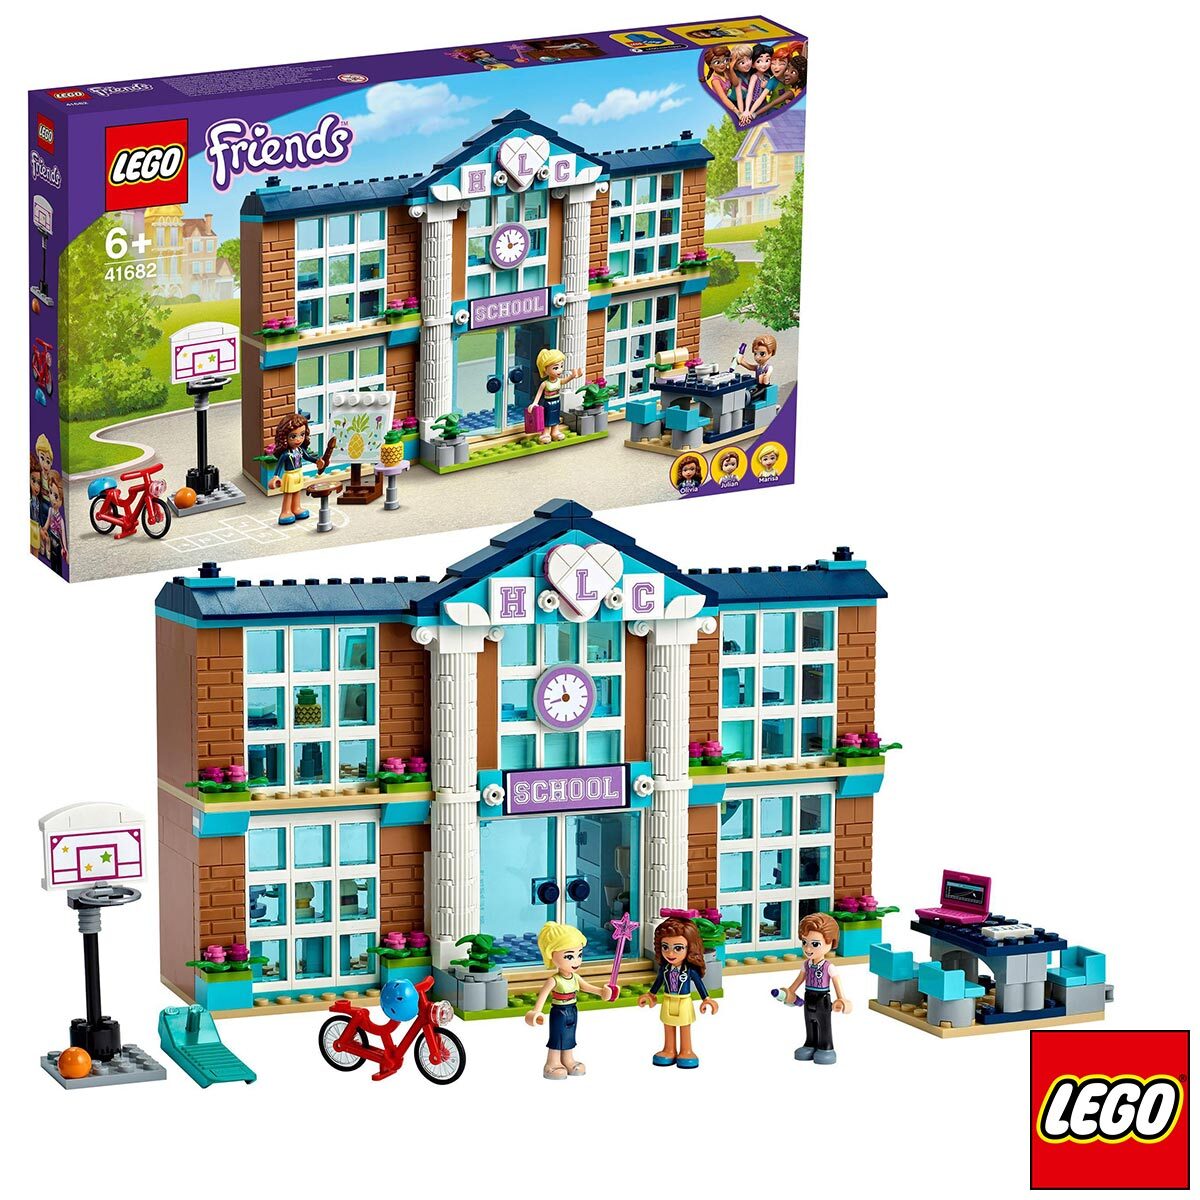 Buy LEGO Friends Heartlake City School Box & Product Image at costco.co.uk